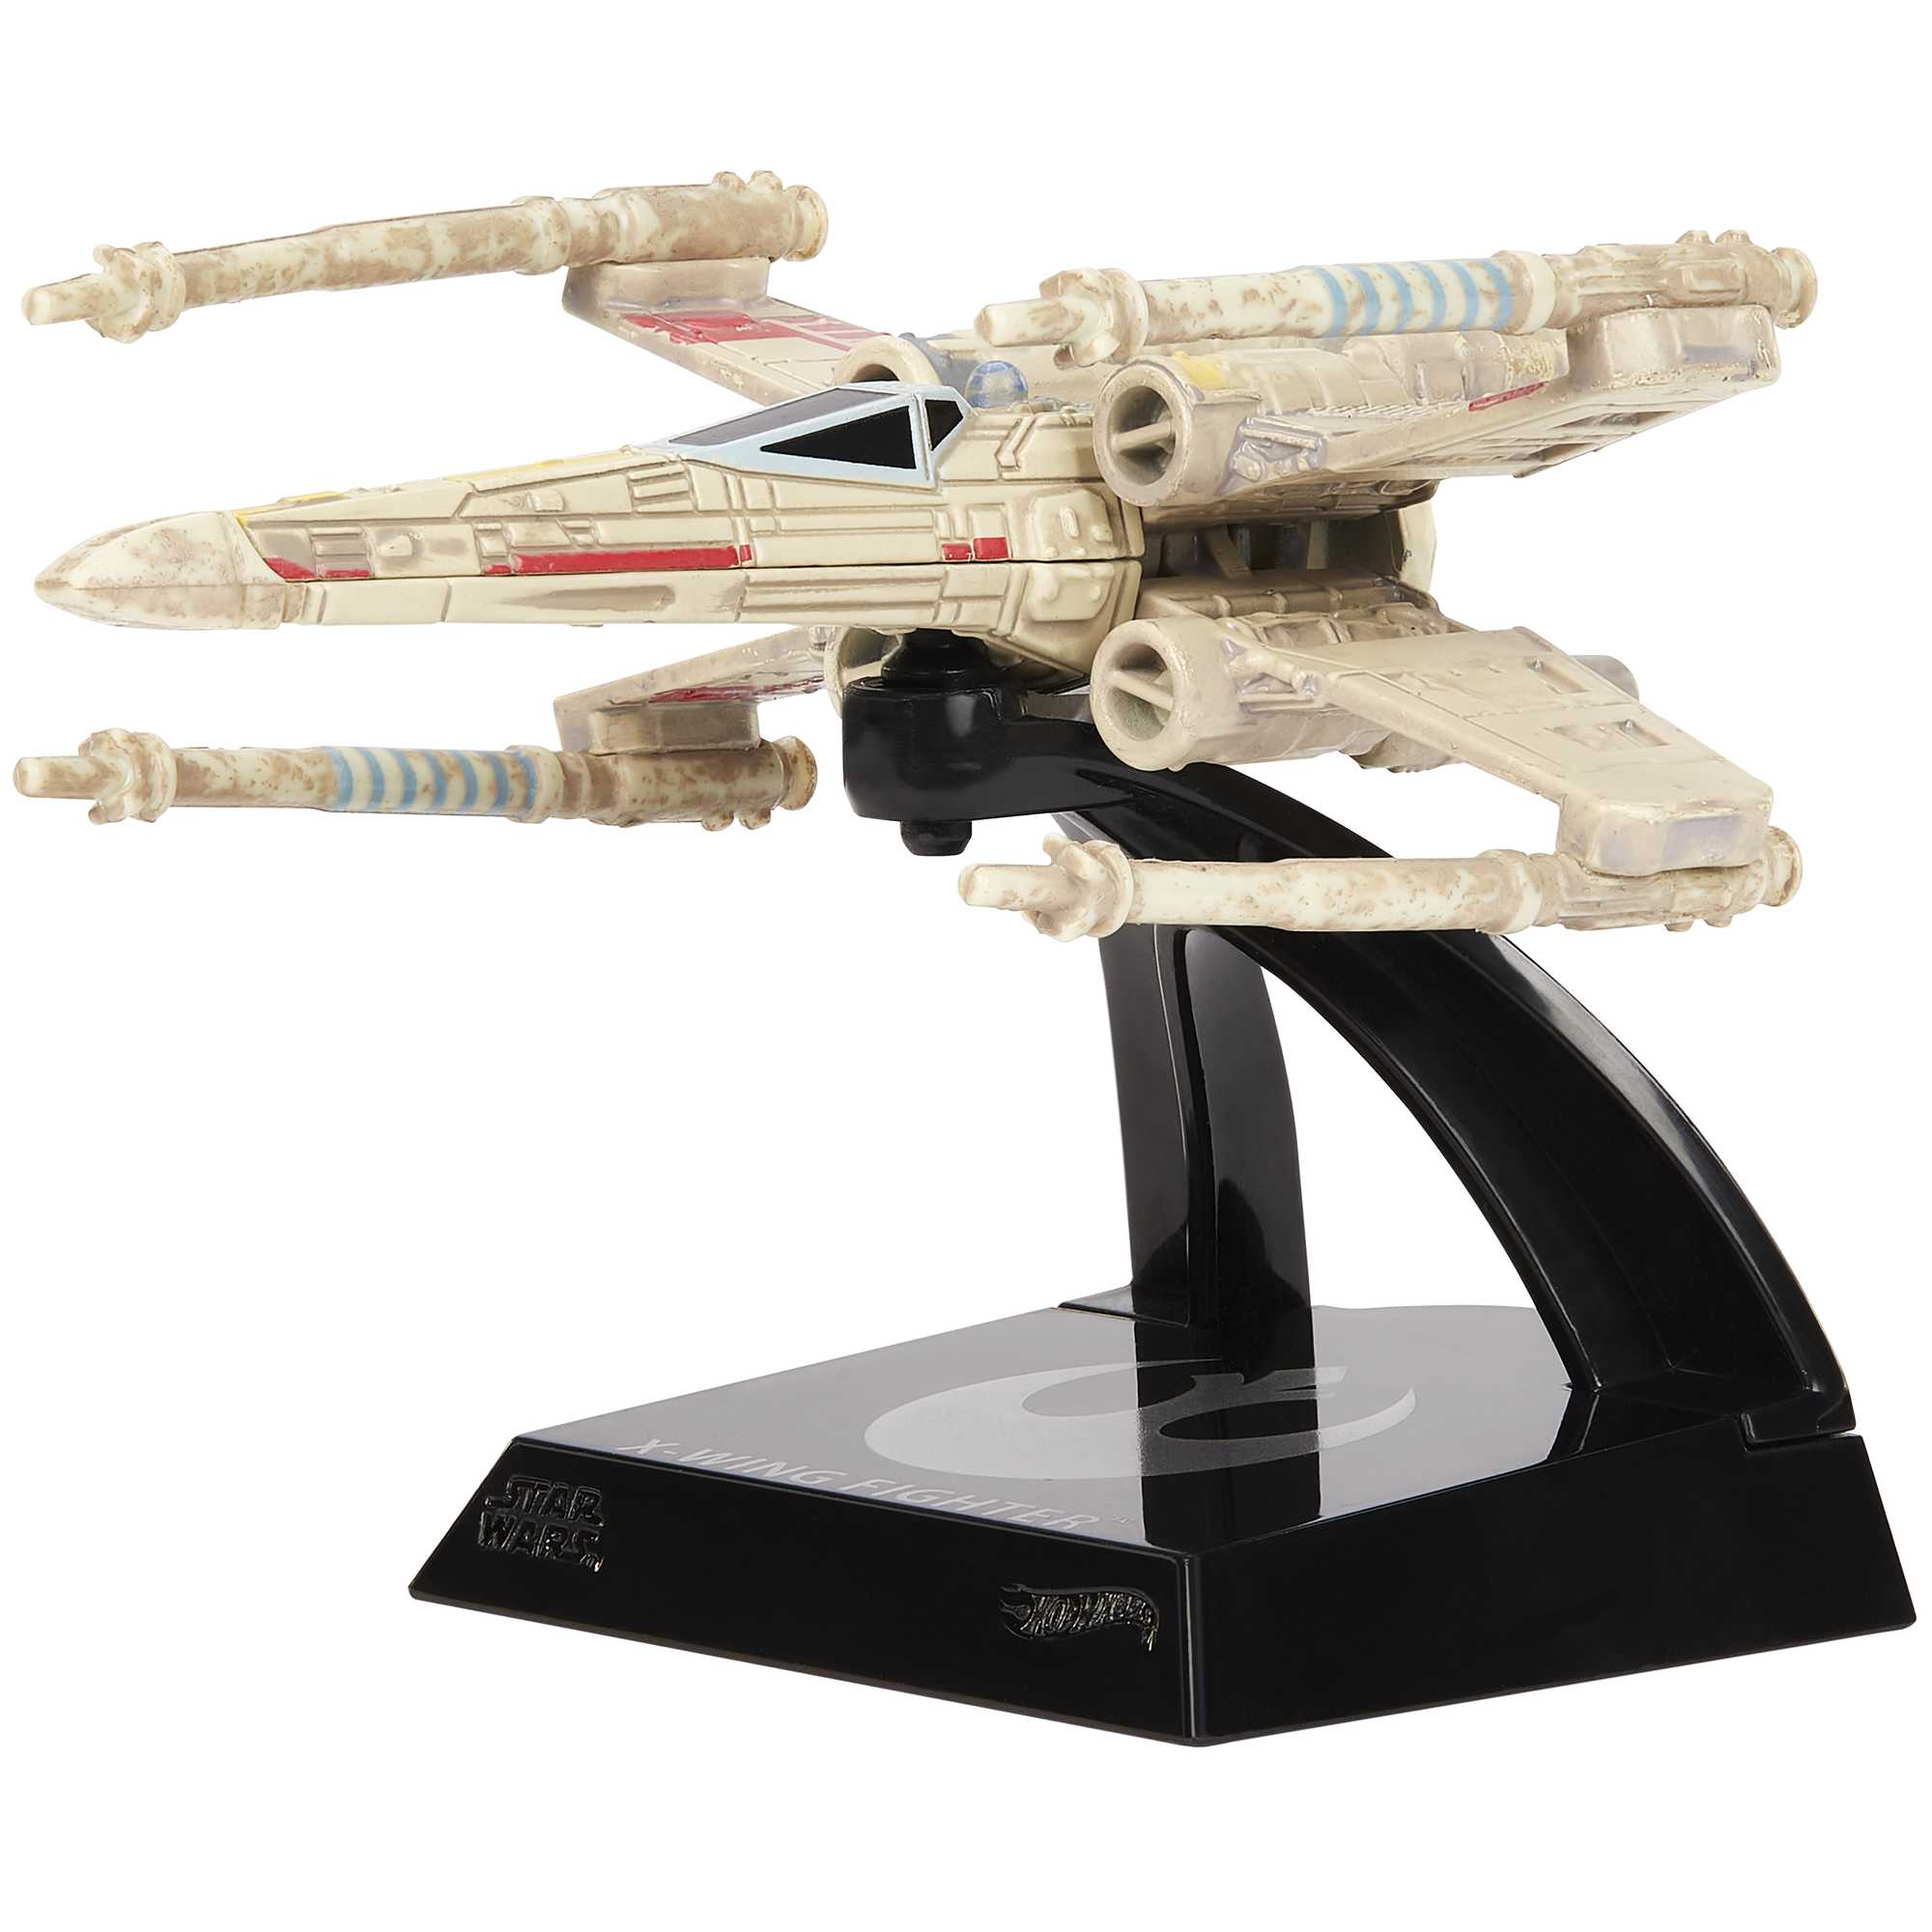 Hot Wheels Star Wars Starships Select | Mattel